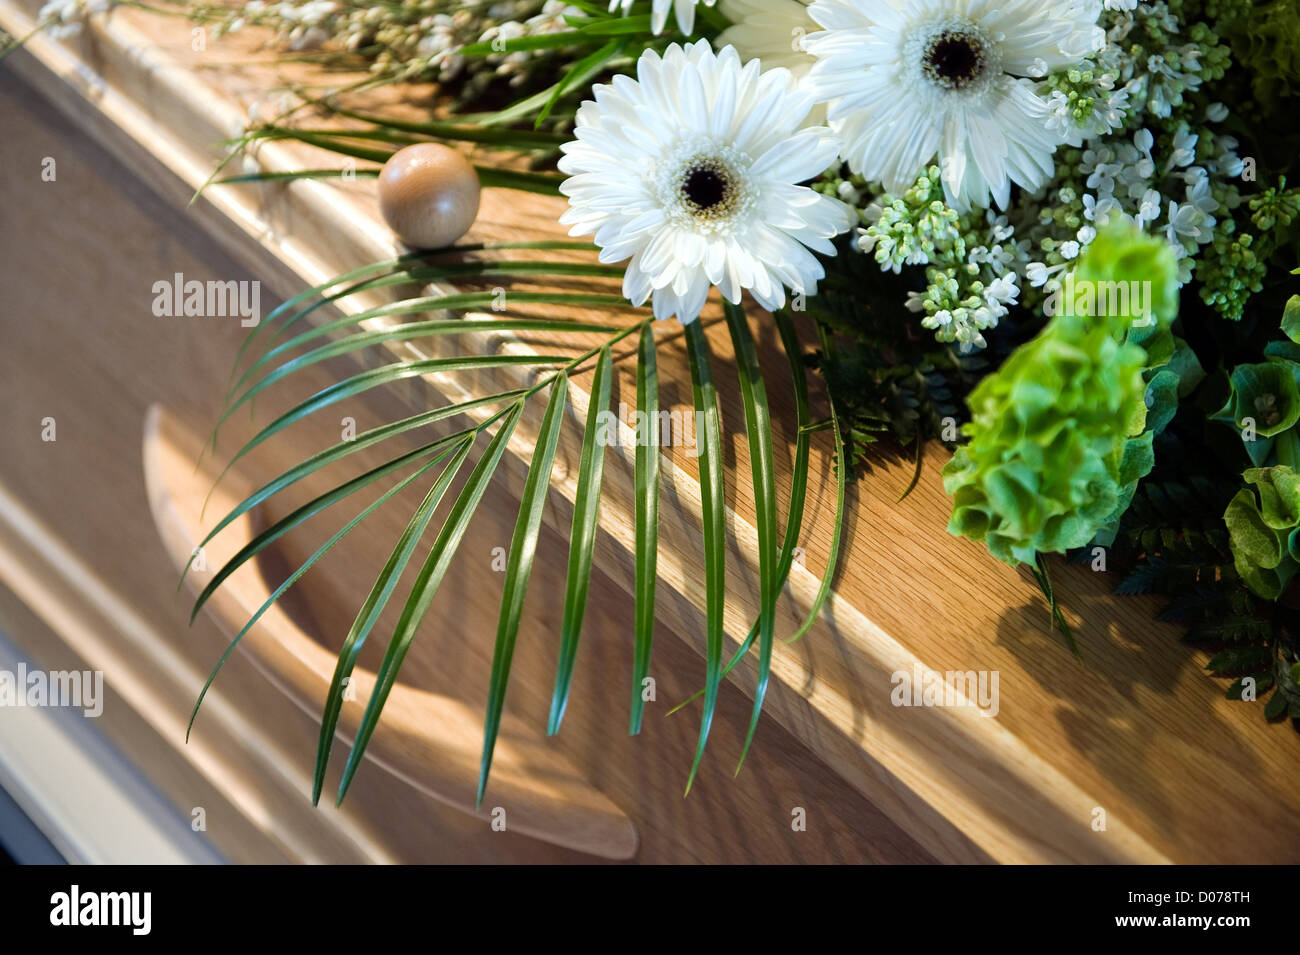 Una bara con un omaggio floreale in una camera mortuaria Foto Stock